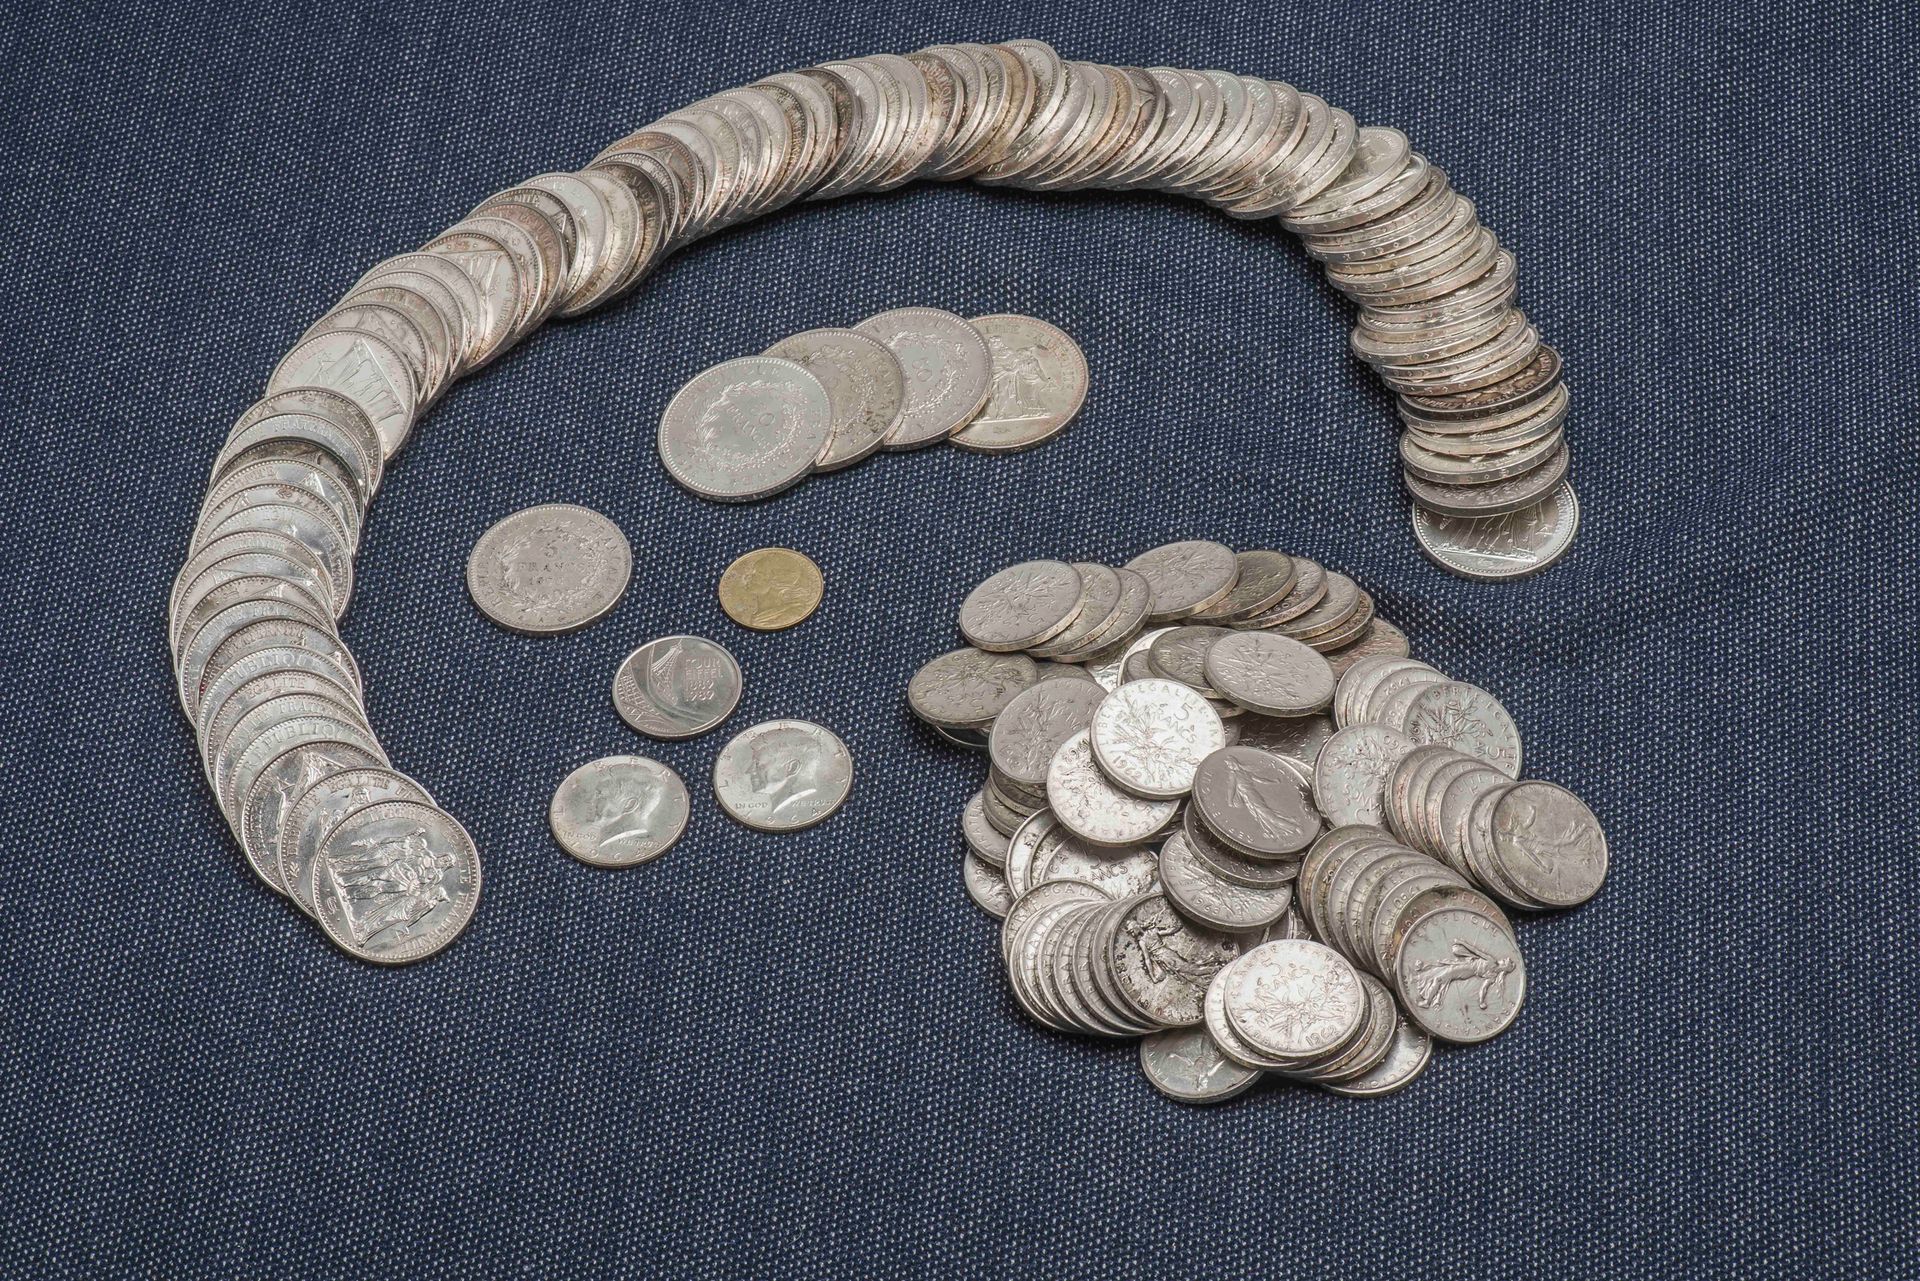 Null 一批银币包括：4枚50法郎的海格力斯硬币，76枚10法郎的海格力斯硬币，86枚5法郎的塞梅斯硬币，1枚5法郎的海格力斯硬币。

重量：3065.9克
&hellip;